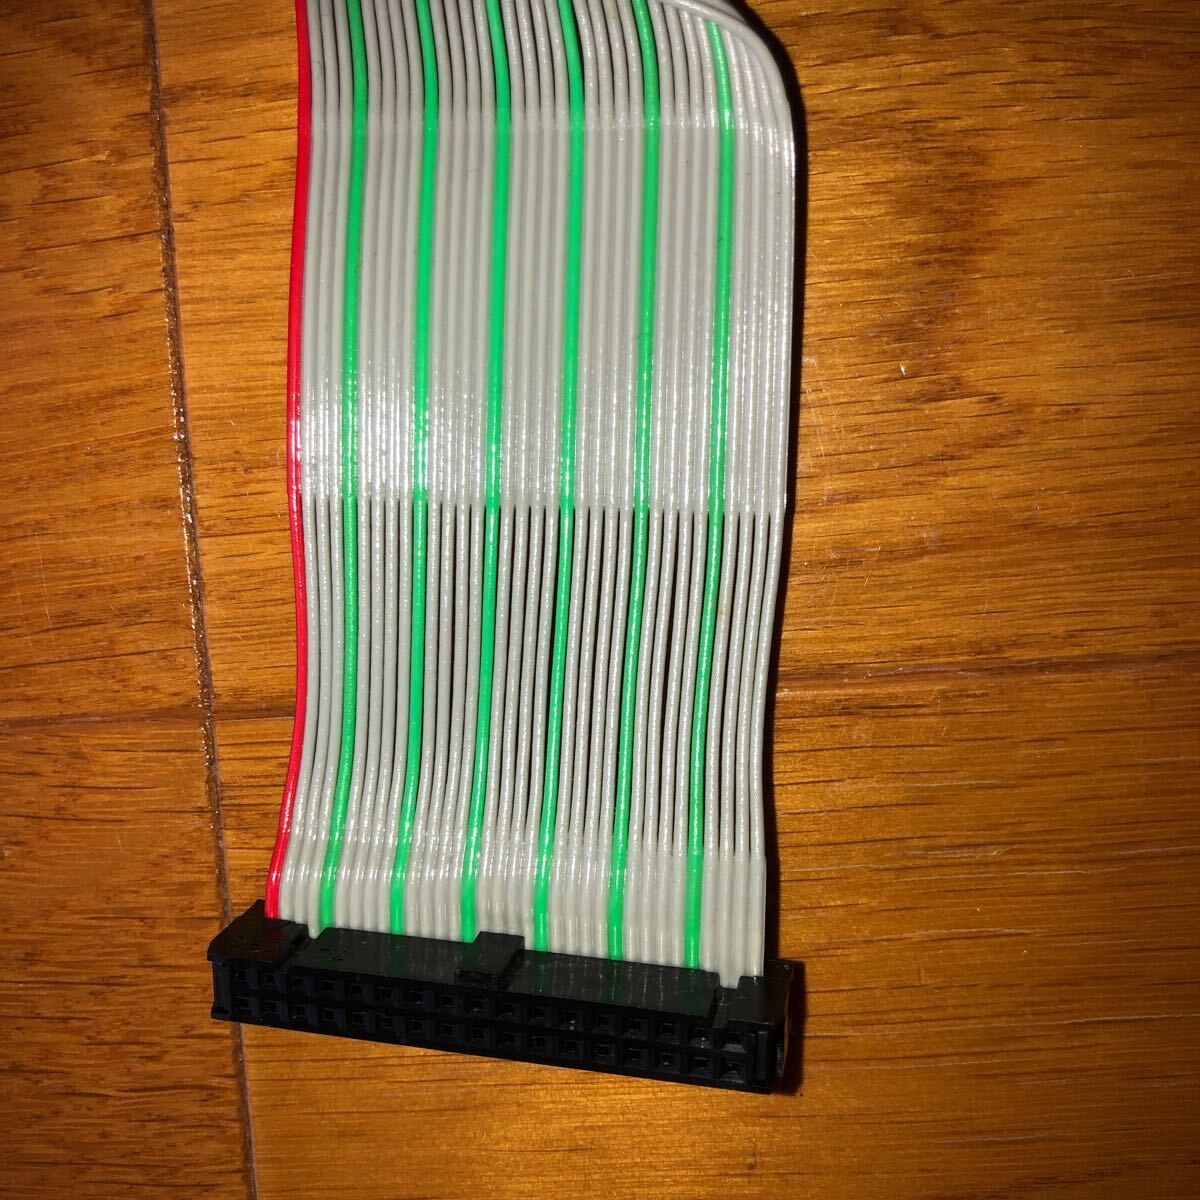 5 -inch FDD cable 